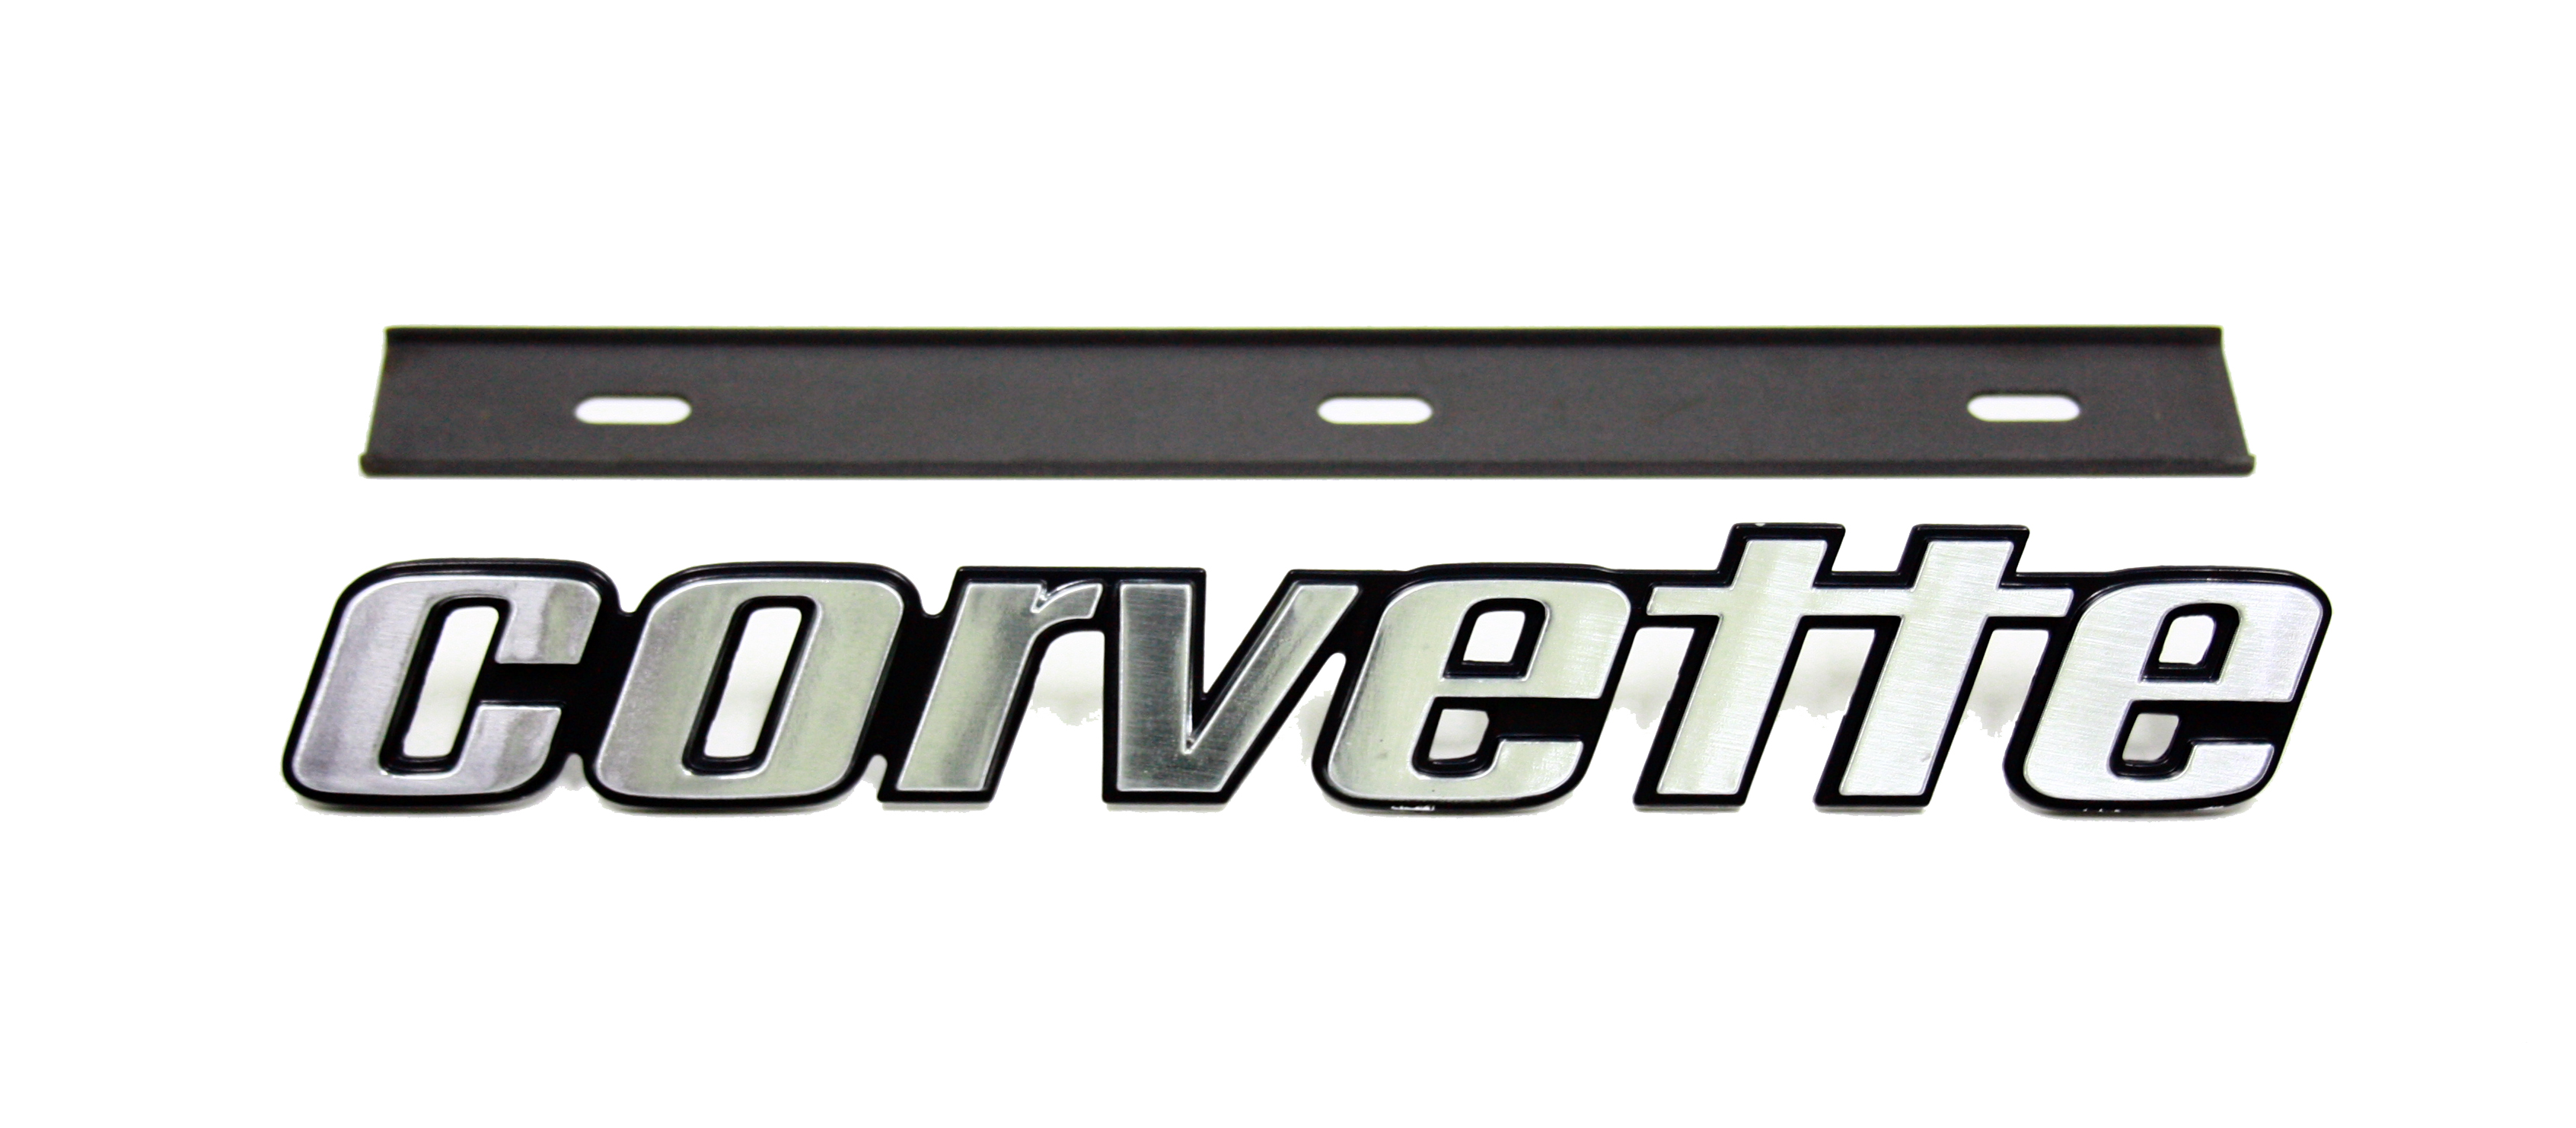 Corvette Rear Bumper Emblem (Corvette)